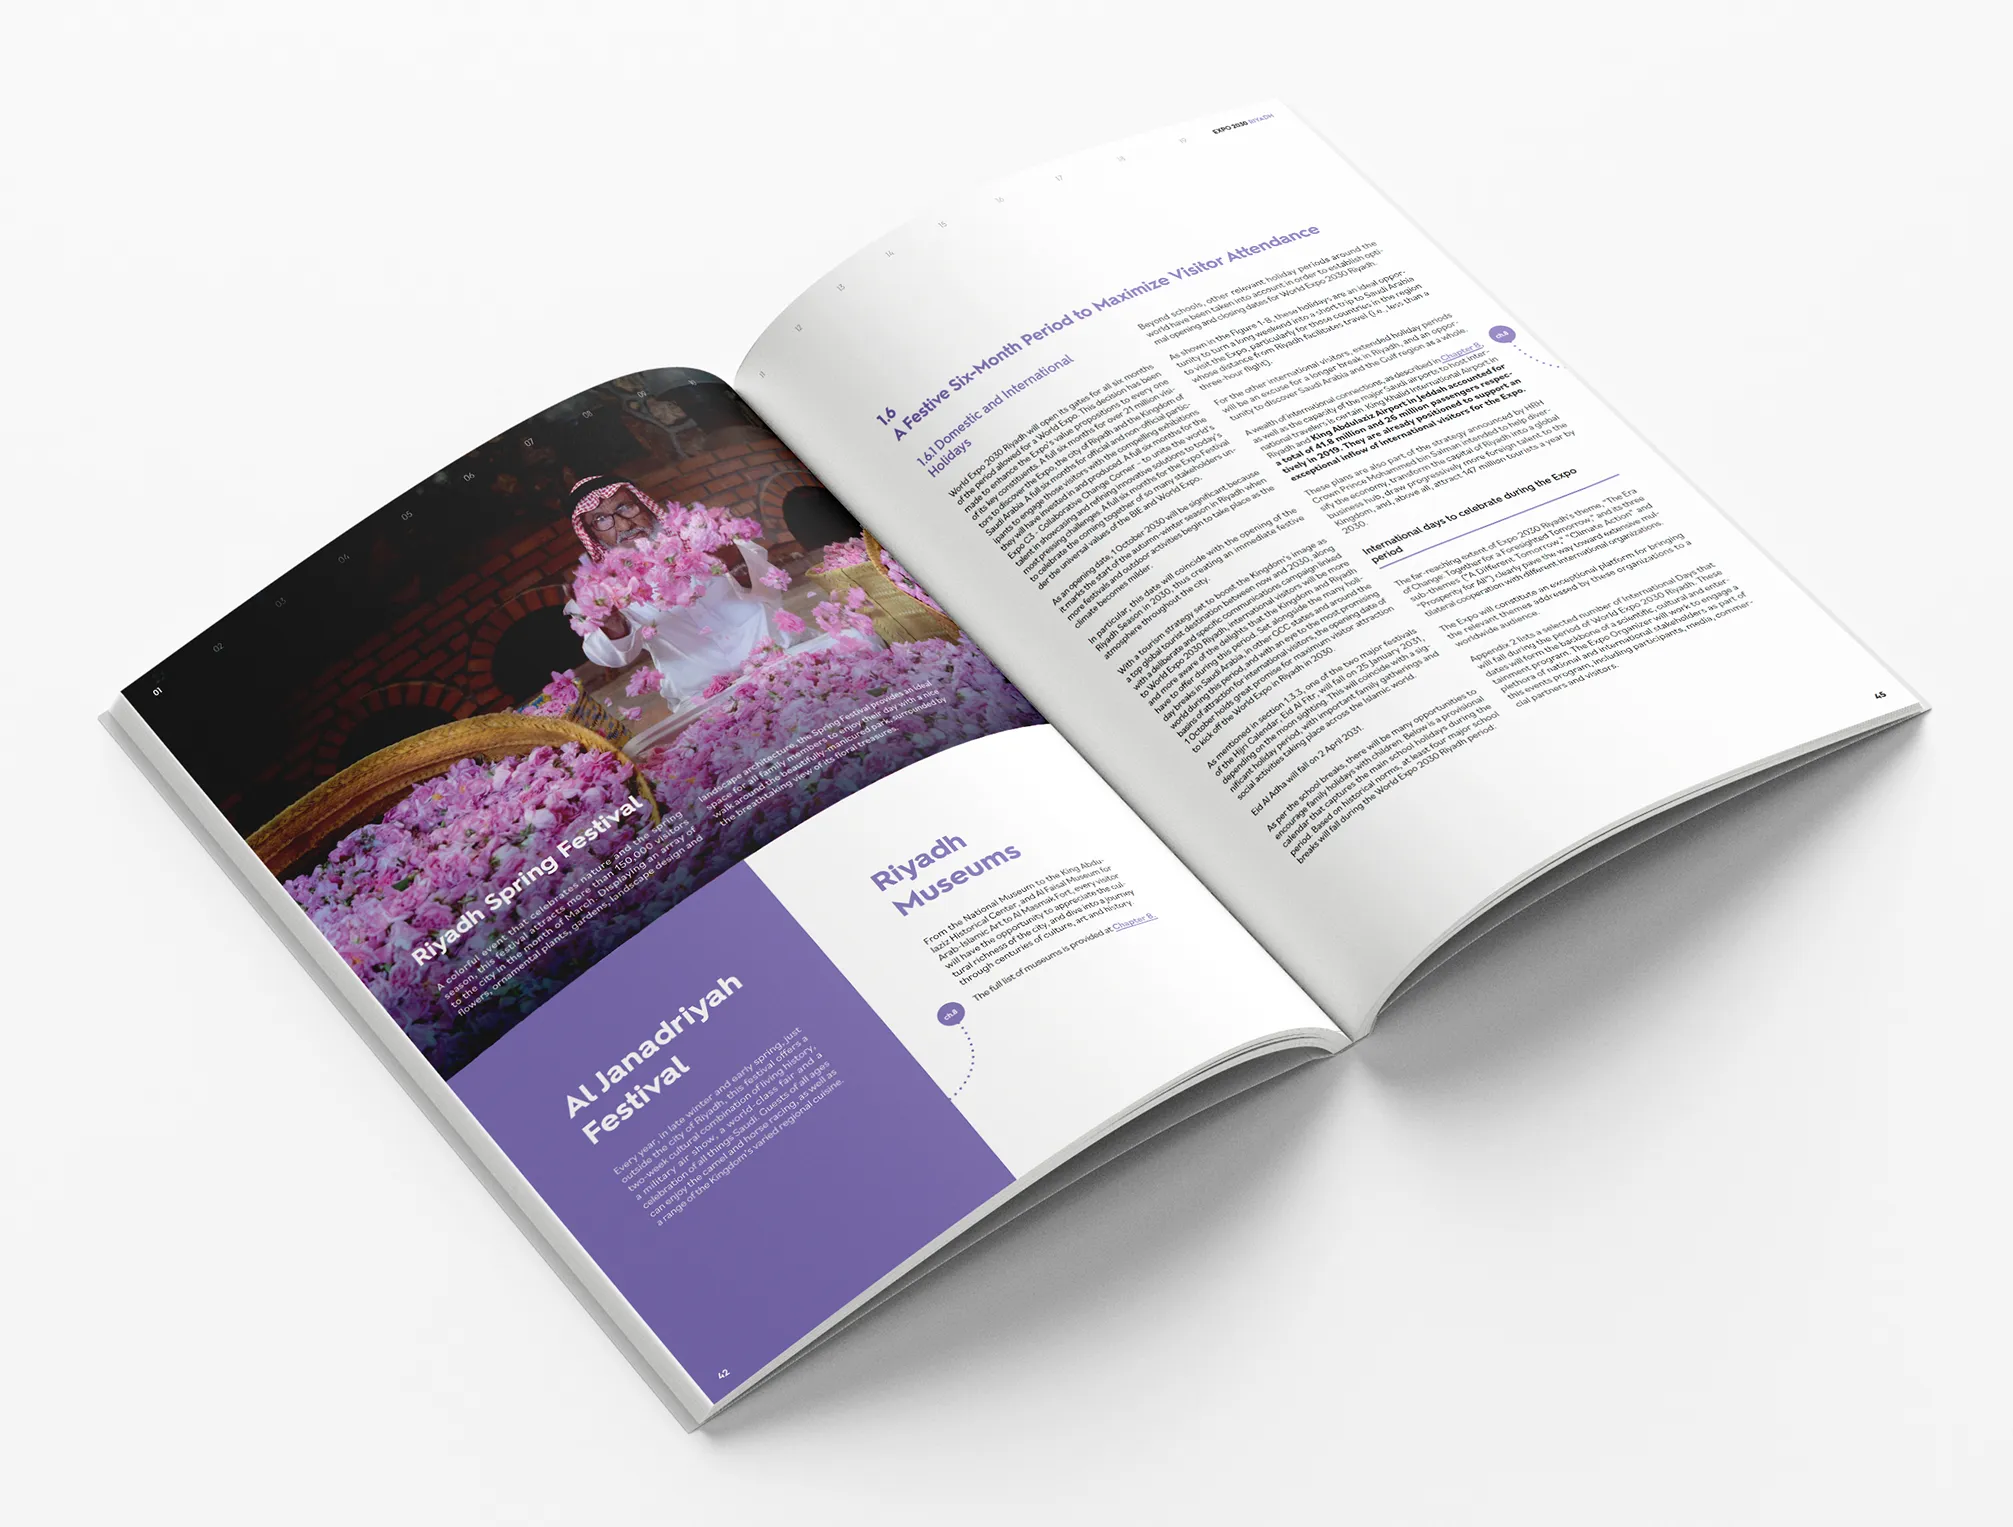 luxurybrands digital studio riyadh2030 bid book pages